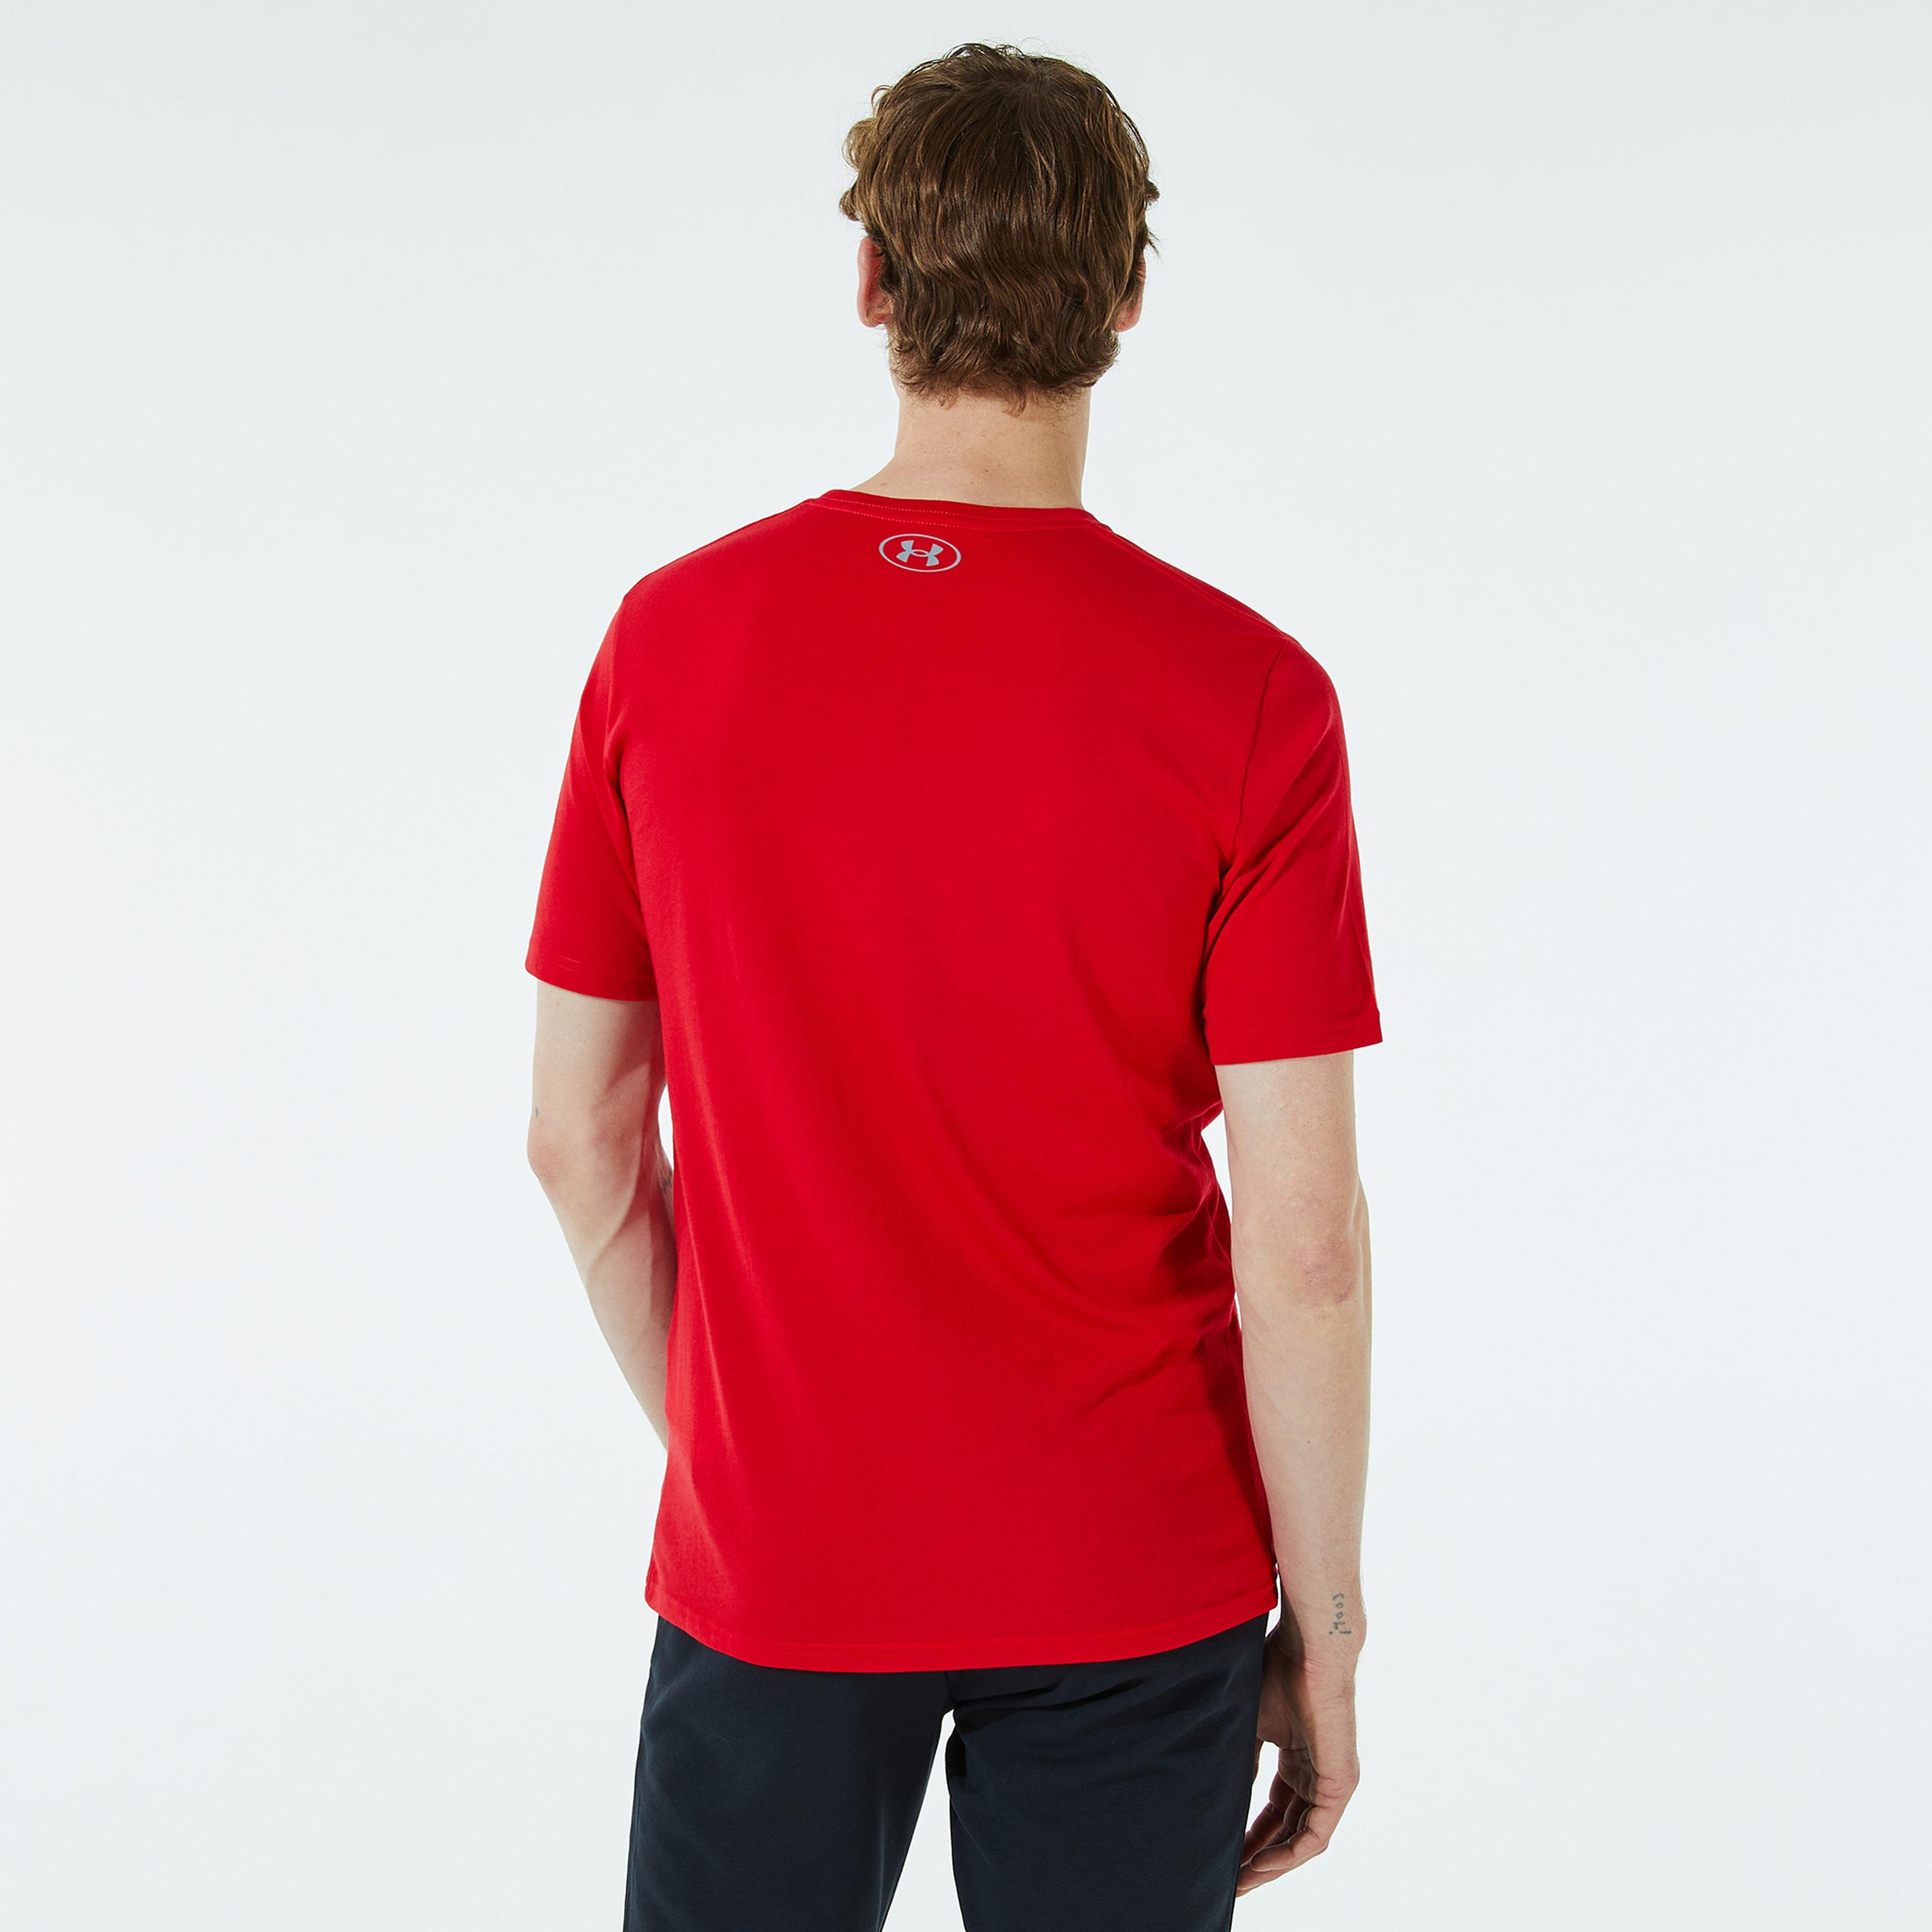 Under Armour Team Issue Wordmark Erkek Kırmızı Kısa Kollu T-Shirt